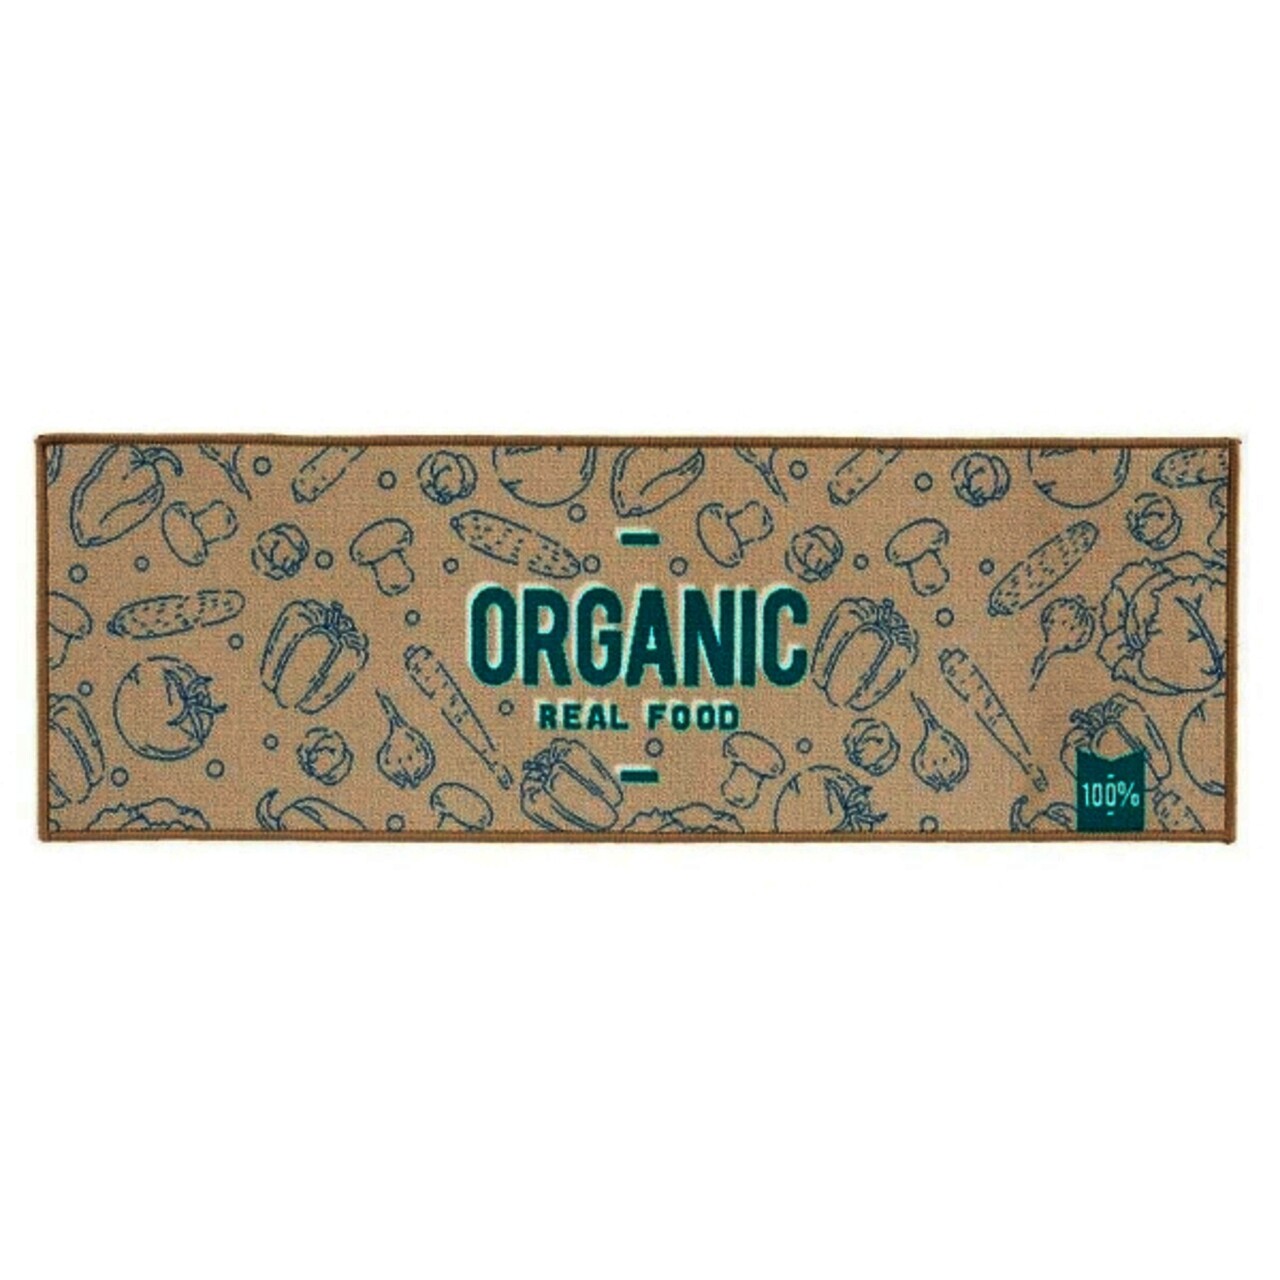 Covor pentru bucatarie Organic, Gift Decor, 40 x 120 cm, poliamida, bej/albastru/verde